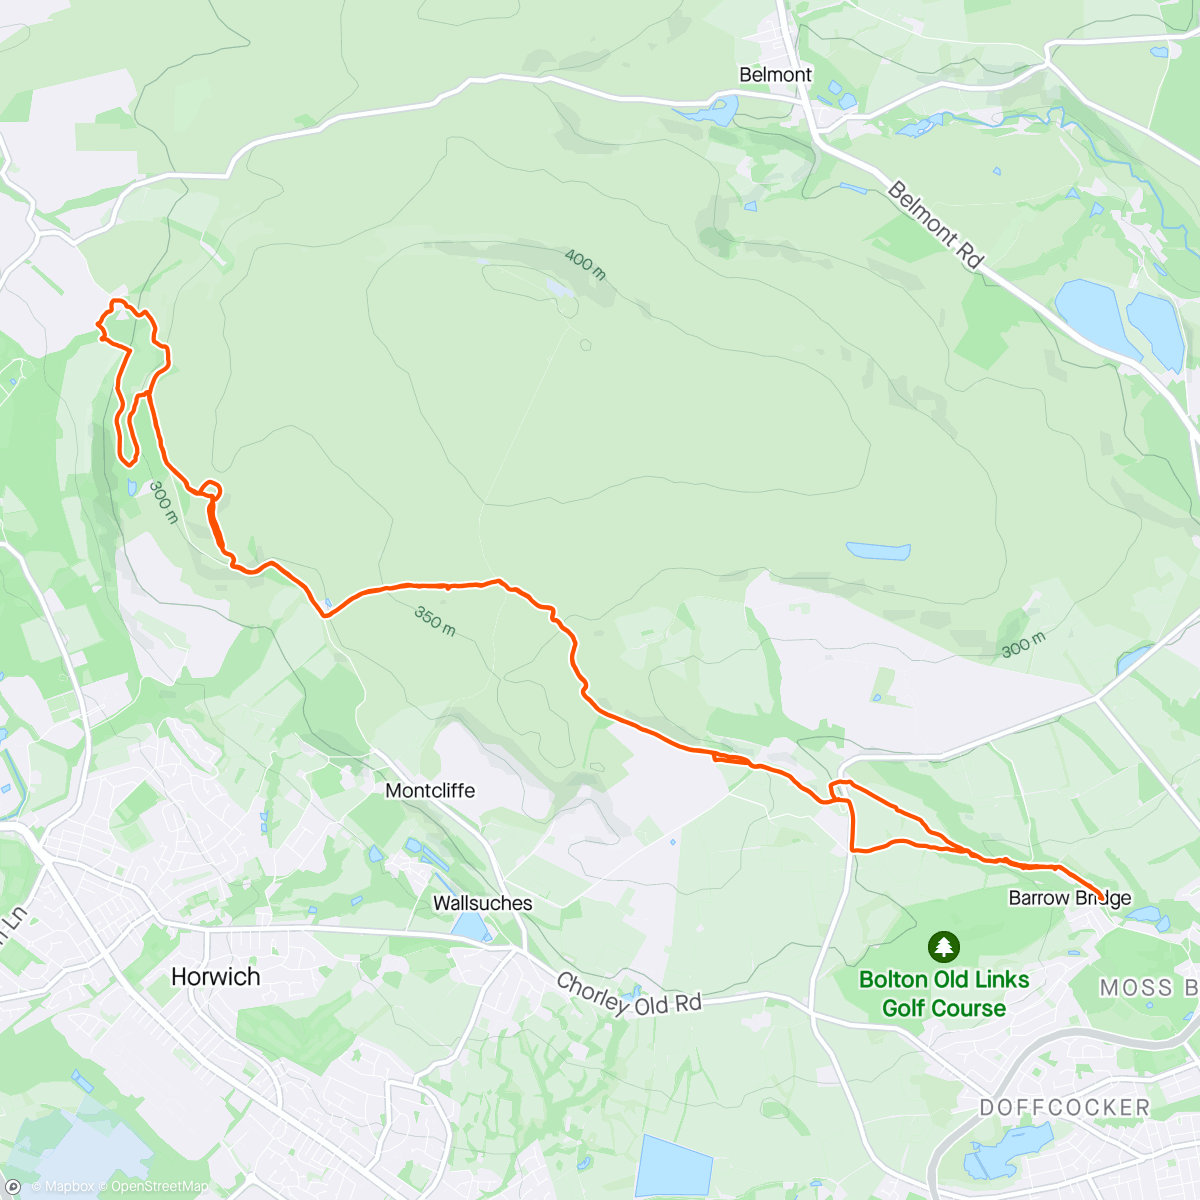 Map of the activity, Hike with Kazza from Barrow Bridge, 2 Lads twice, Rivi Pike twice.